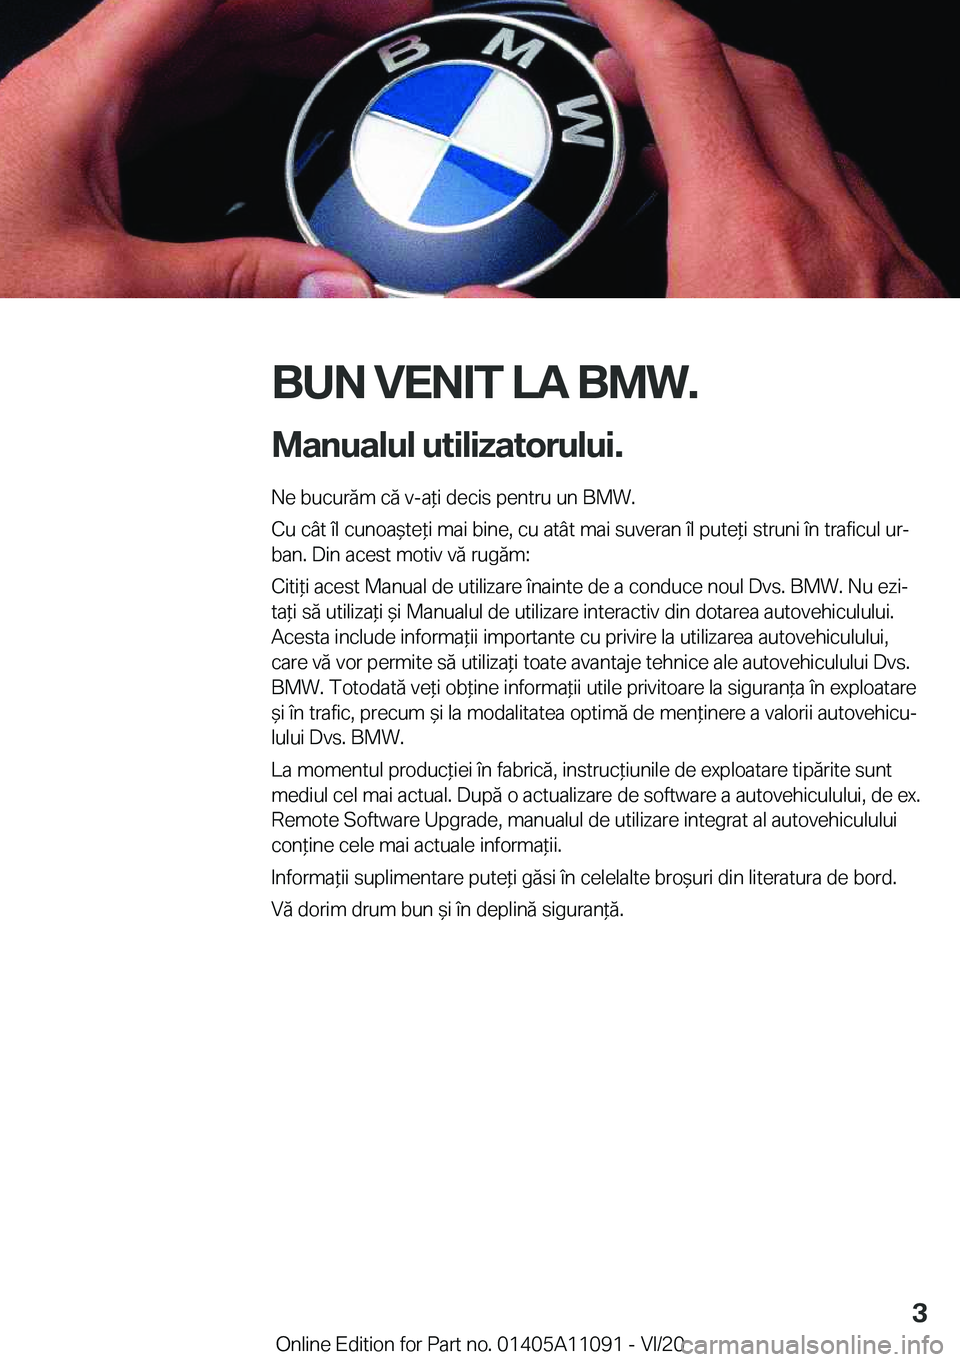 BMW 7 SERIES 2021  Ghiduri De Utilizare (in Romanian) �B�U�N��V�E�N�I�T��L�A��B�M�W�.�M�a�n�u�a�l�u�l��u�t�i�l�i�z�a�t�o�r�u�l�u�i�.
�N�e��b�u�c�u�r�ă�m��c�ă��v�-�a*�i��d�e�c�i�s��p�e�n�t�r�u��u�n��B�M�W�.
�C�u��c�